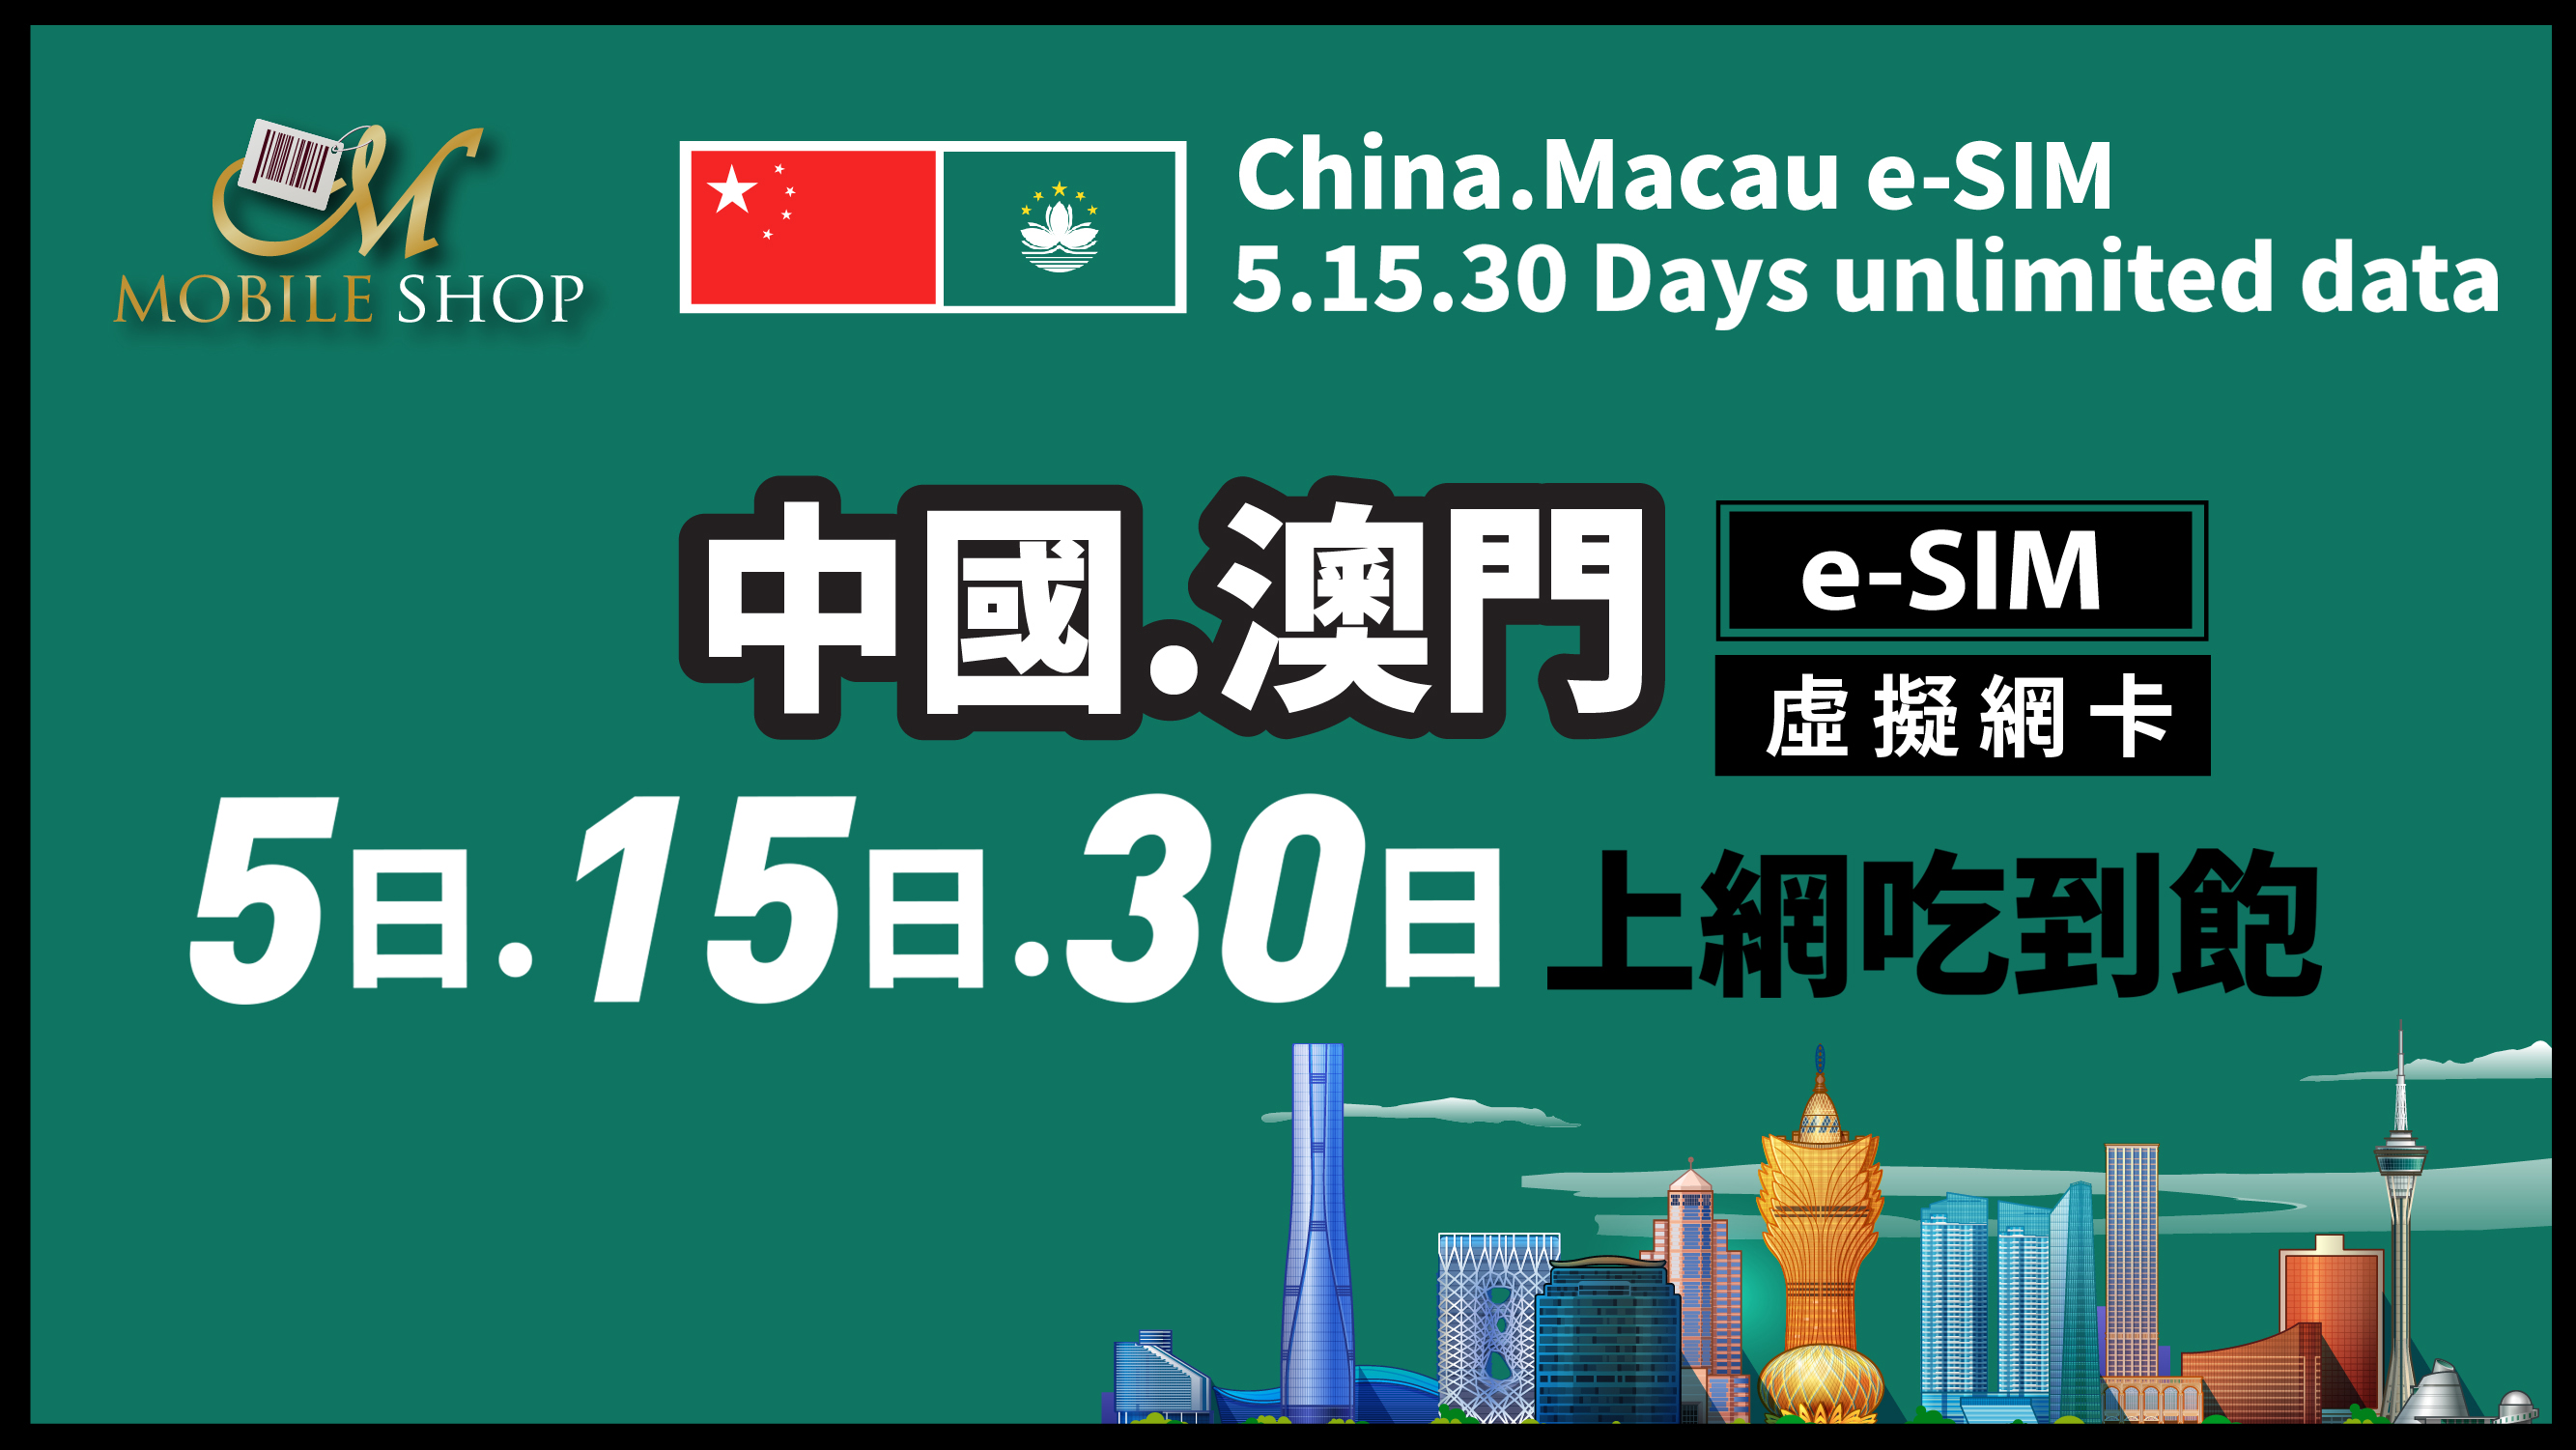 ESIM_China Macau 5. 15. 30 days